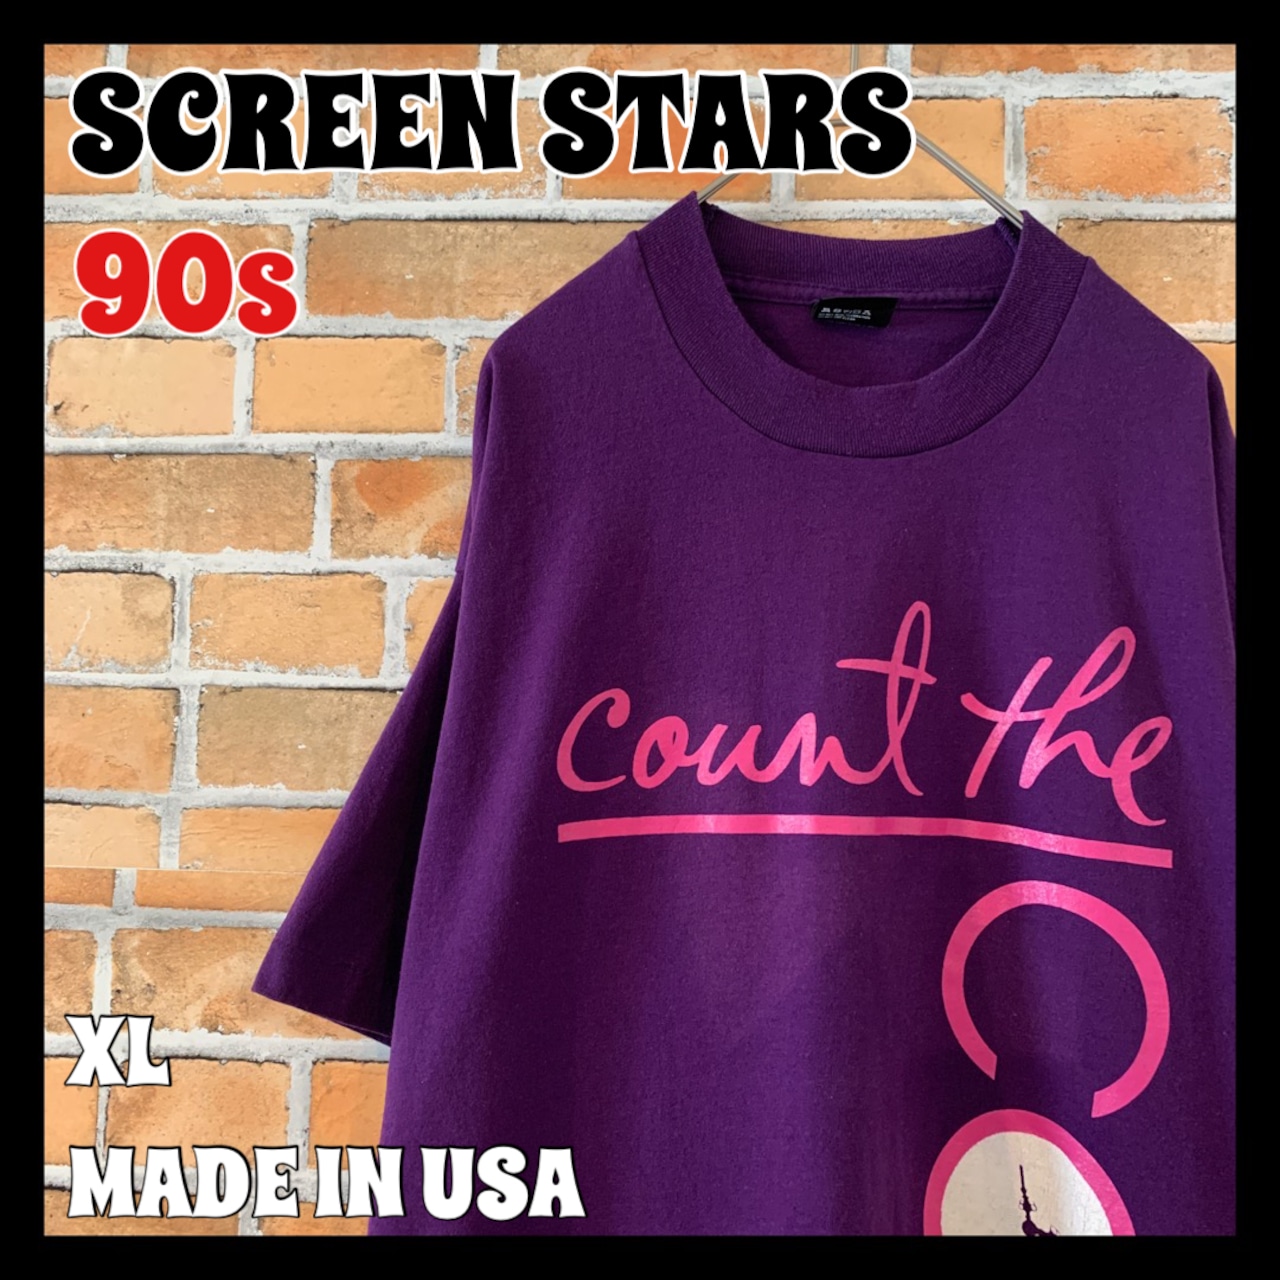 【SCREEN STARS】90s ビンテージ XL Tシャツ USA製